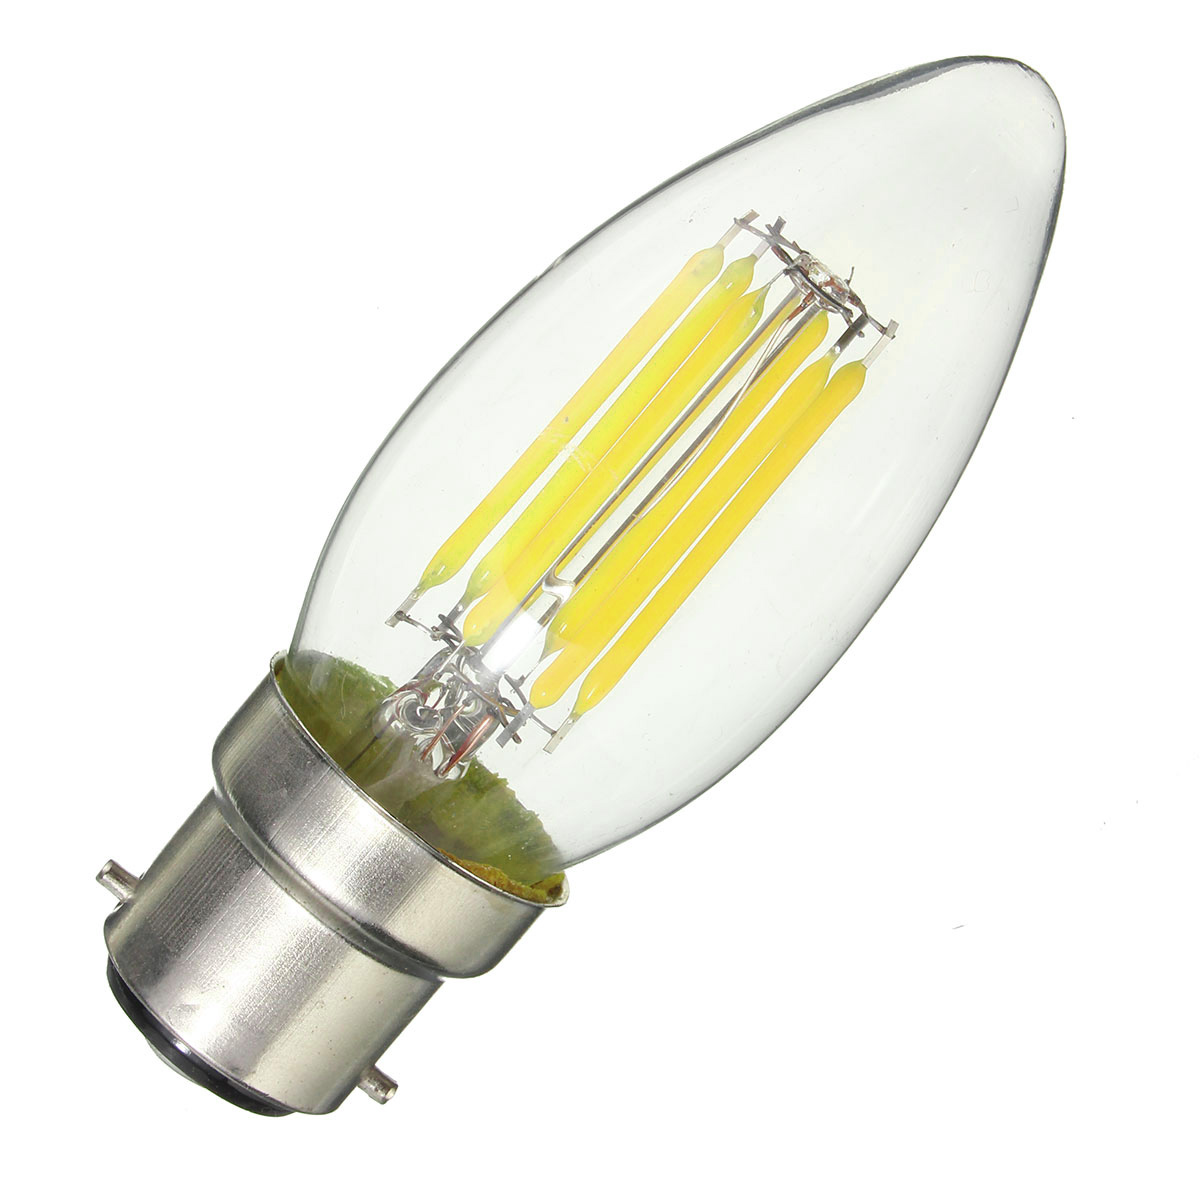 Dimmable-B22-C35-6W-COB-Pure-White-Warm-White-Edison-Retro-Light-Lamp-Bulb-AC220V-1069706-9